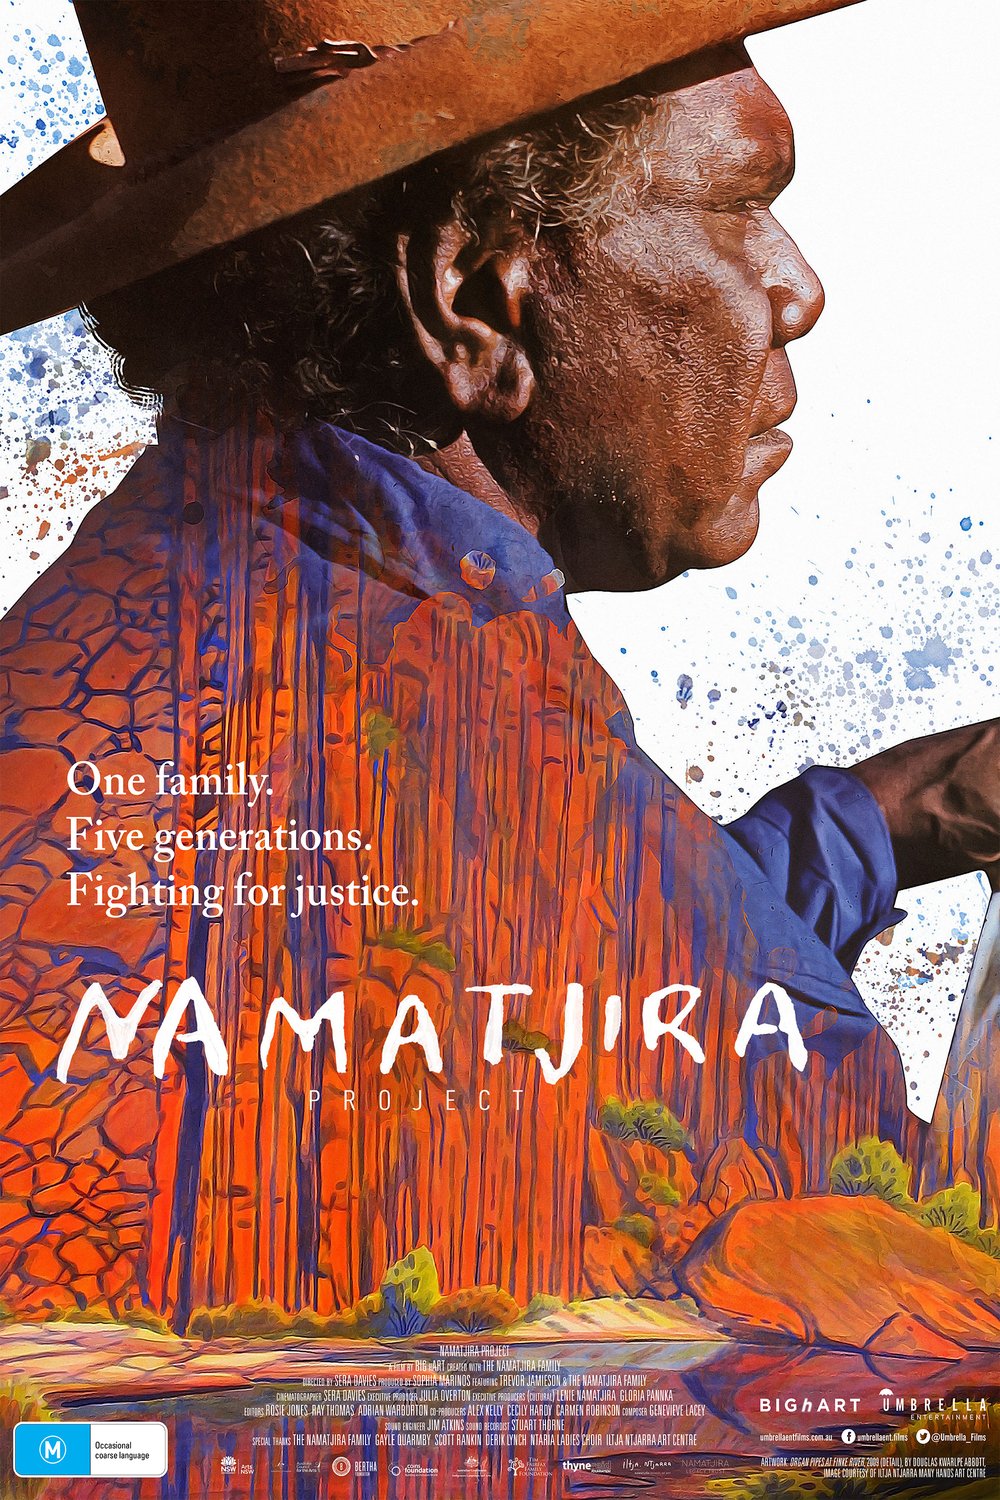 Poster of the movie Namatjira Project